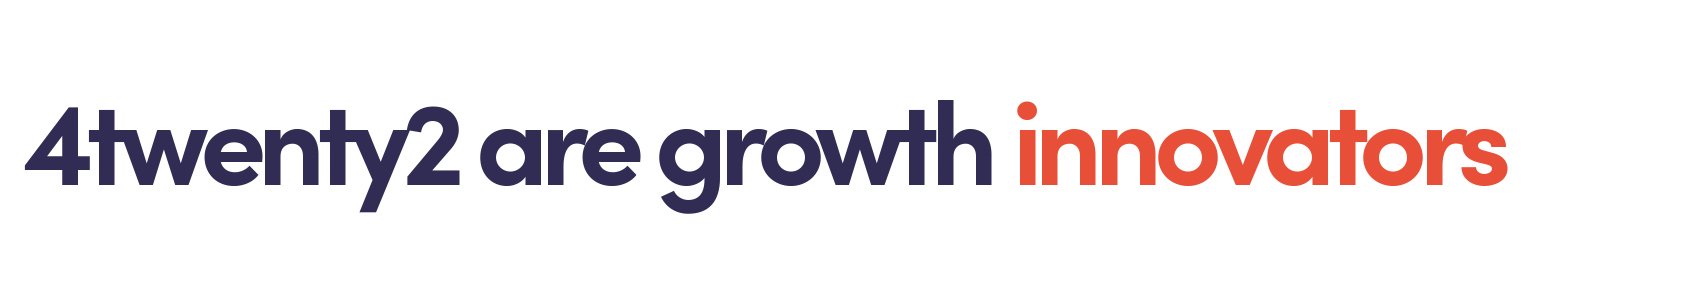 4twenty2-BeKnowledgeable-Growth-Innovators-www.4twenty2.co.uk.jpg